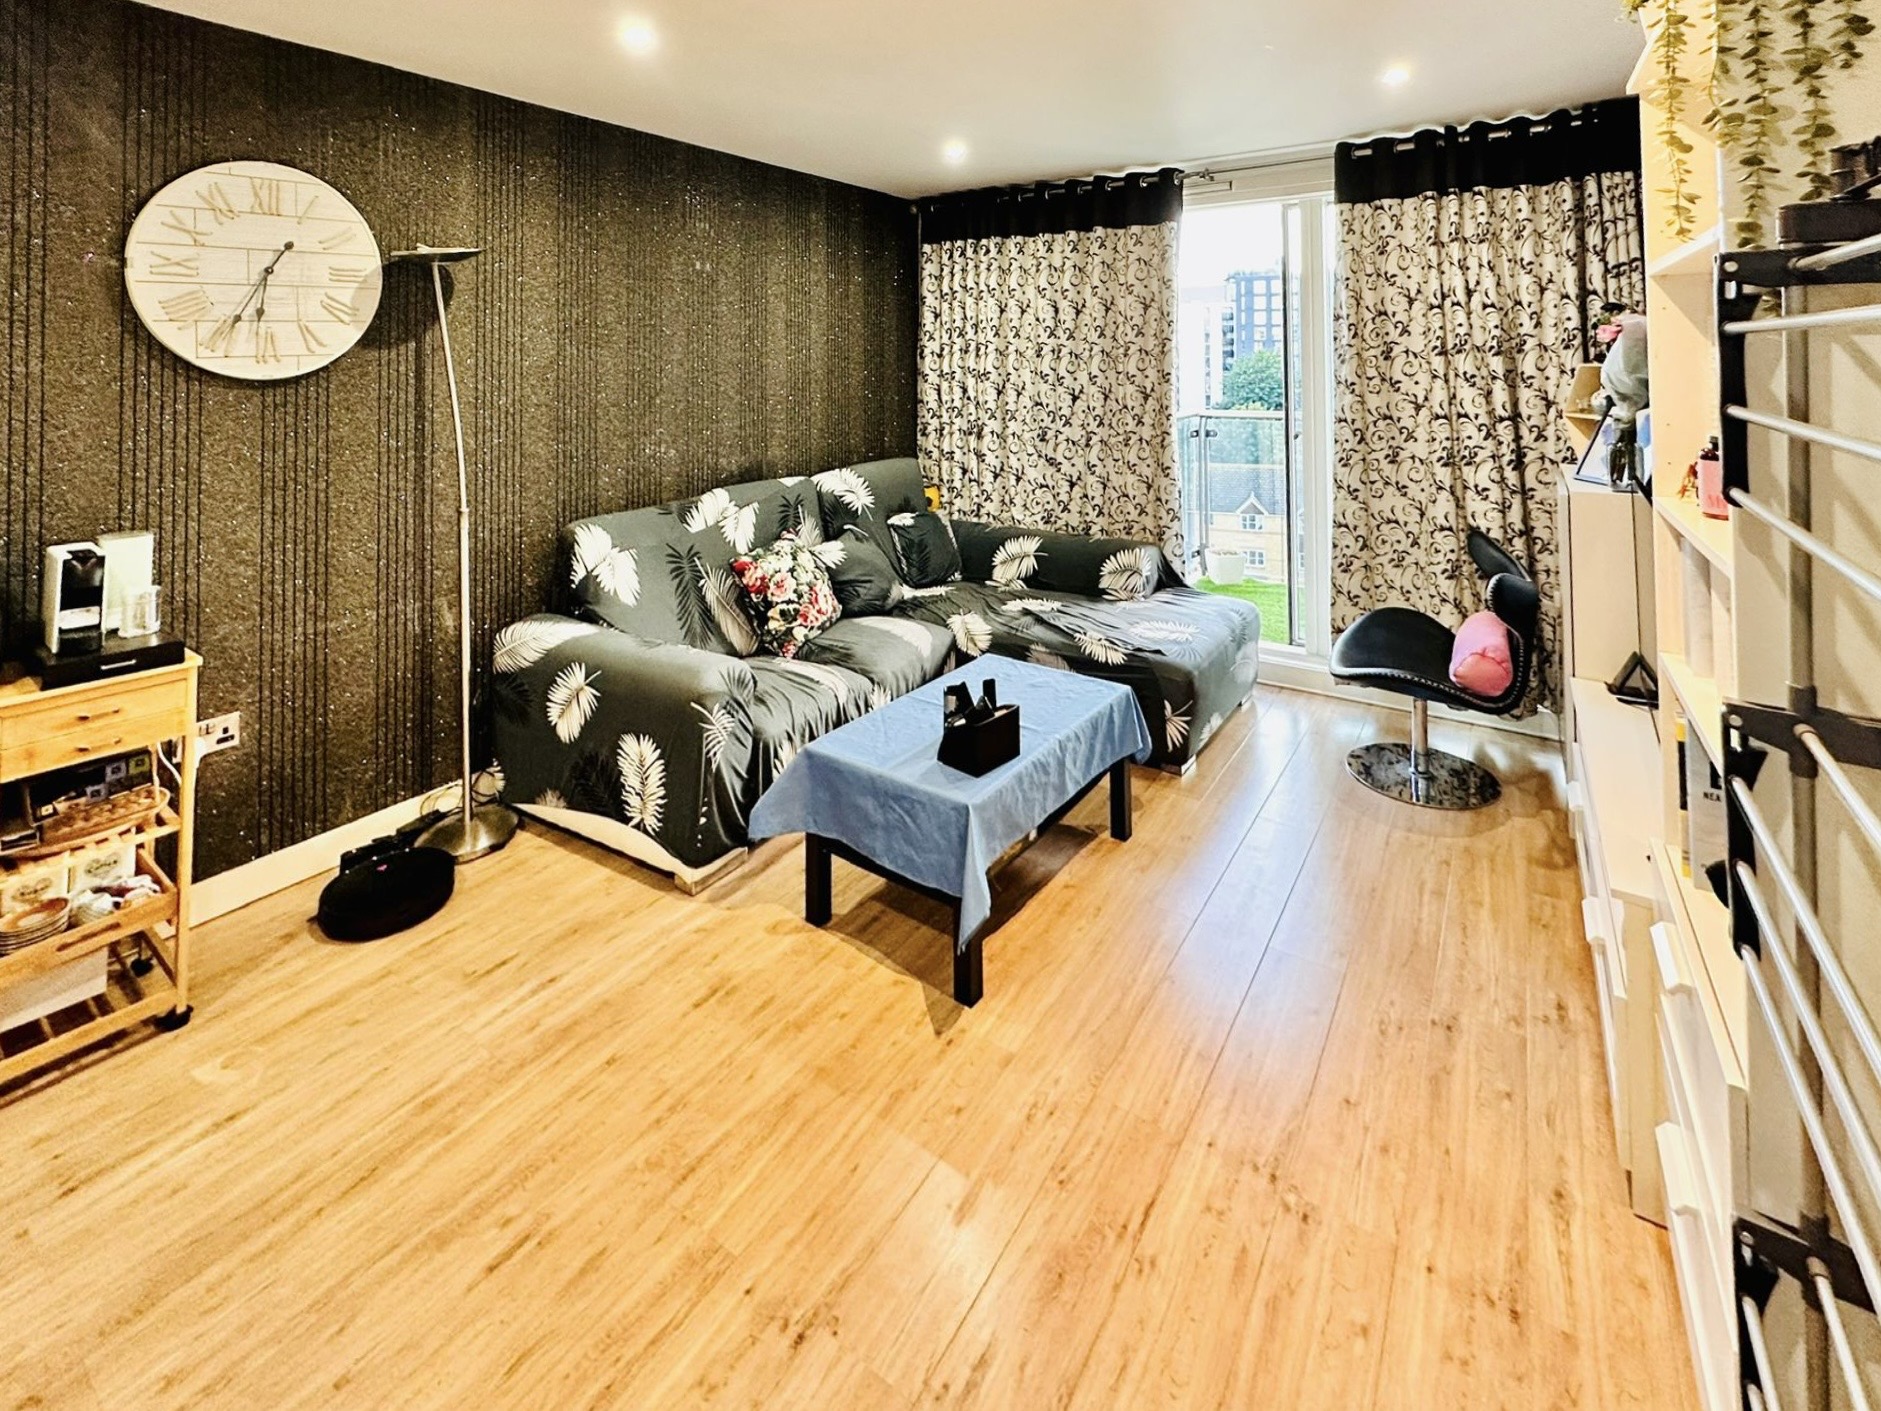 2 bed Apartment/Flat/Studio for rent in Lewisham. From PropertyLoop